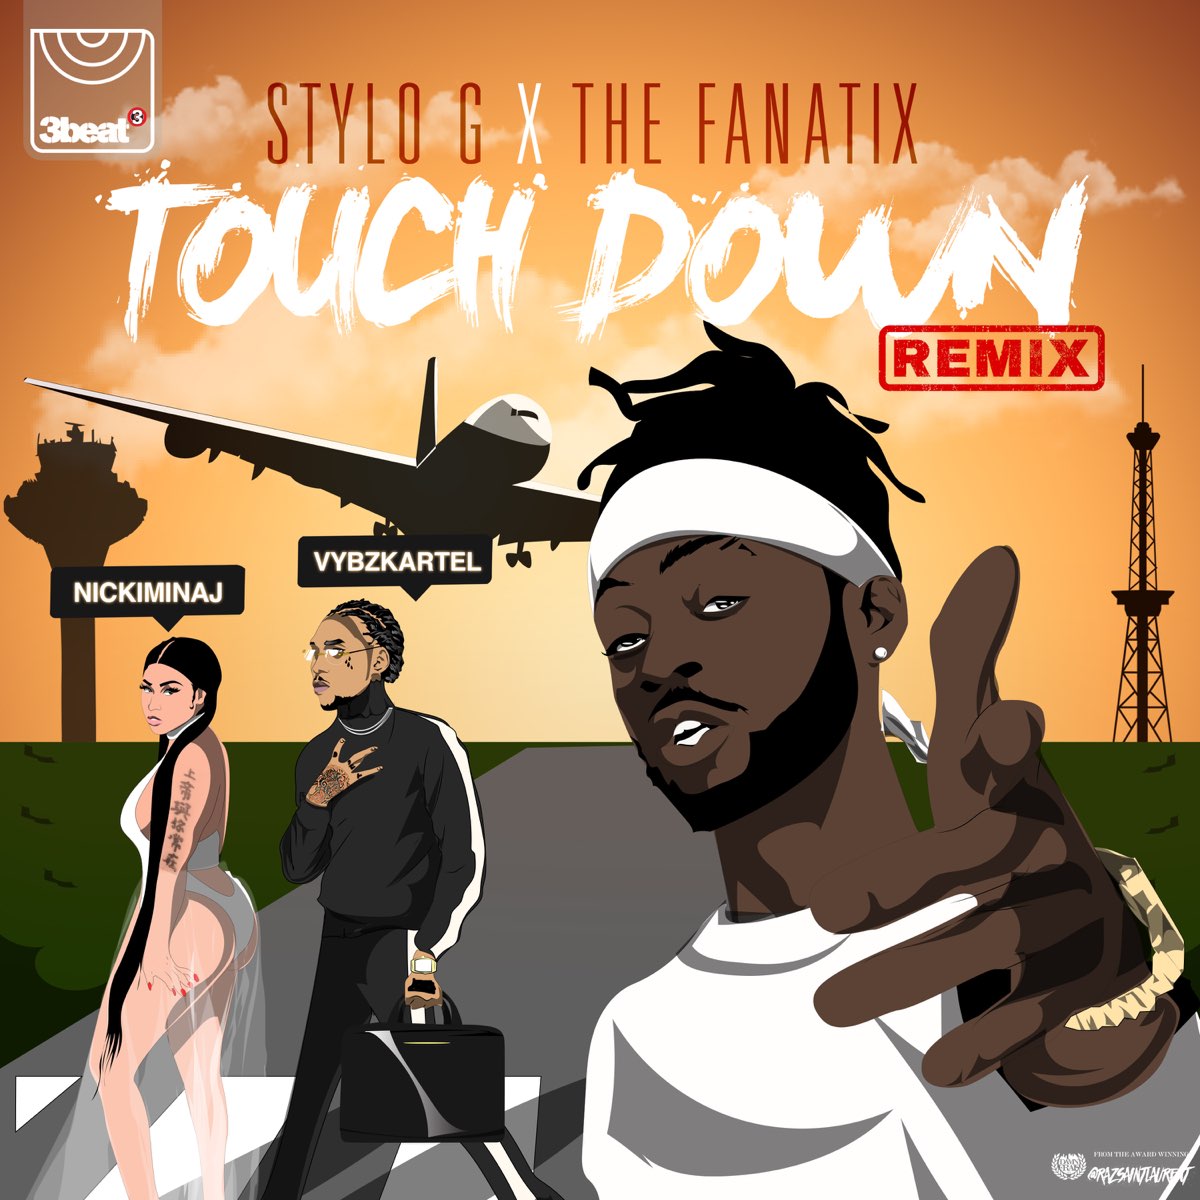 Stylo G & The FaNaTiX ft. featuring Nicki Minaj & Vybz Kartel Touch Down (Remix) cover artwork